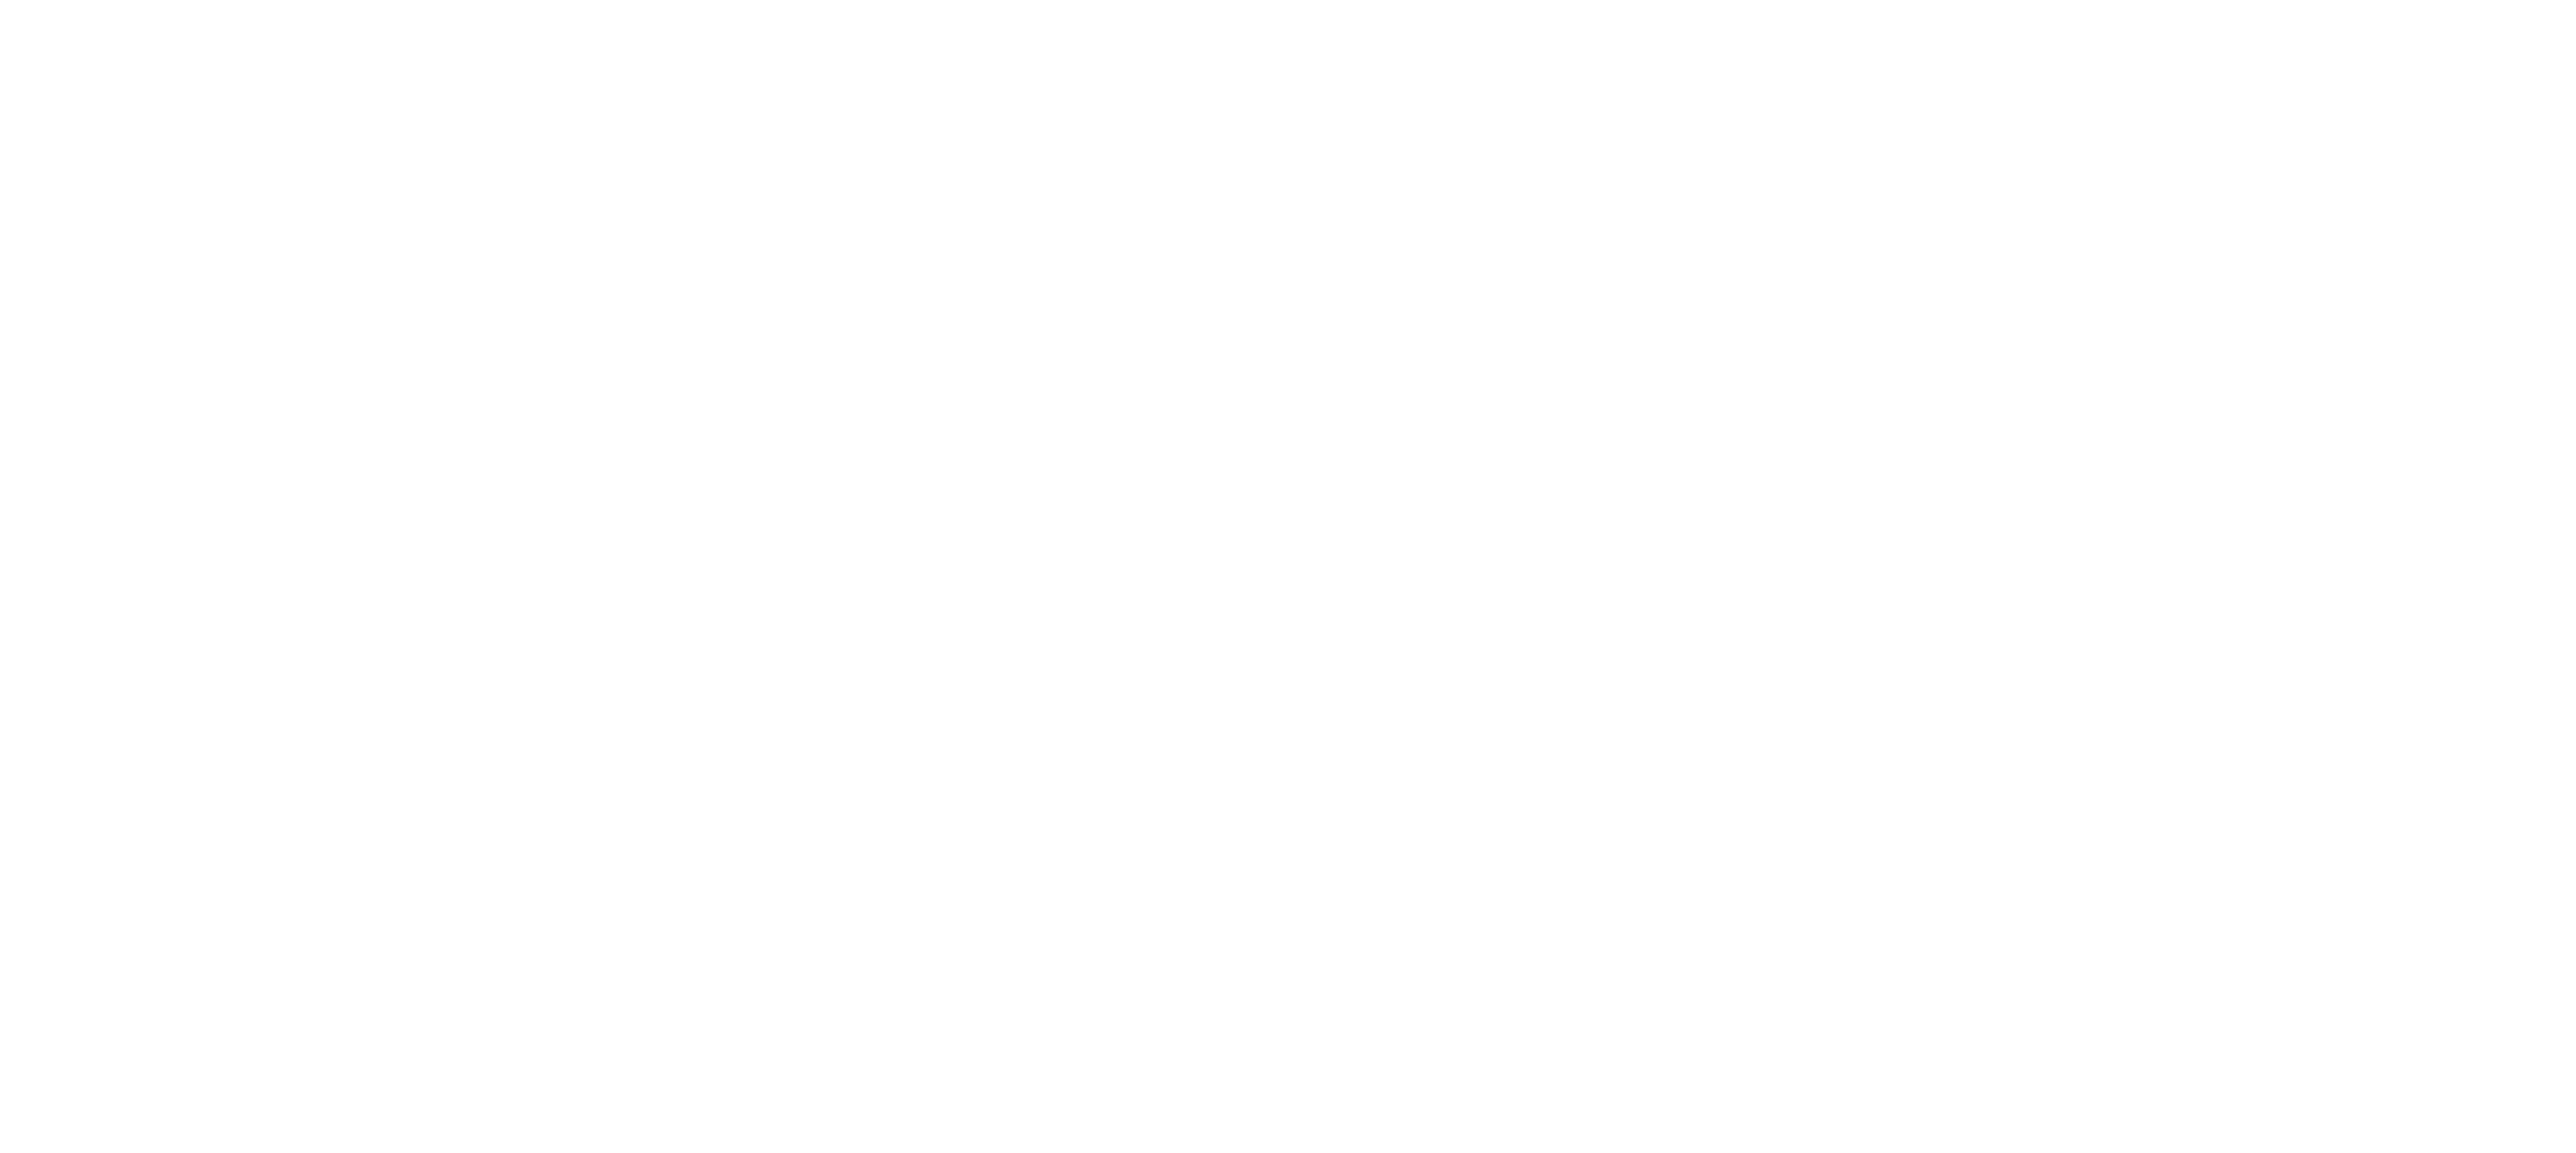 Morrissey, Morrissey & Rydzik